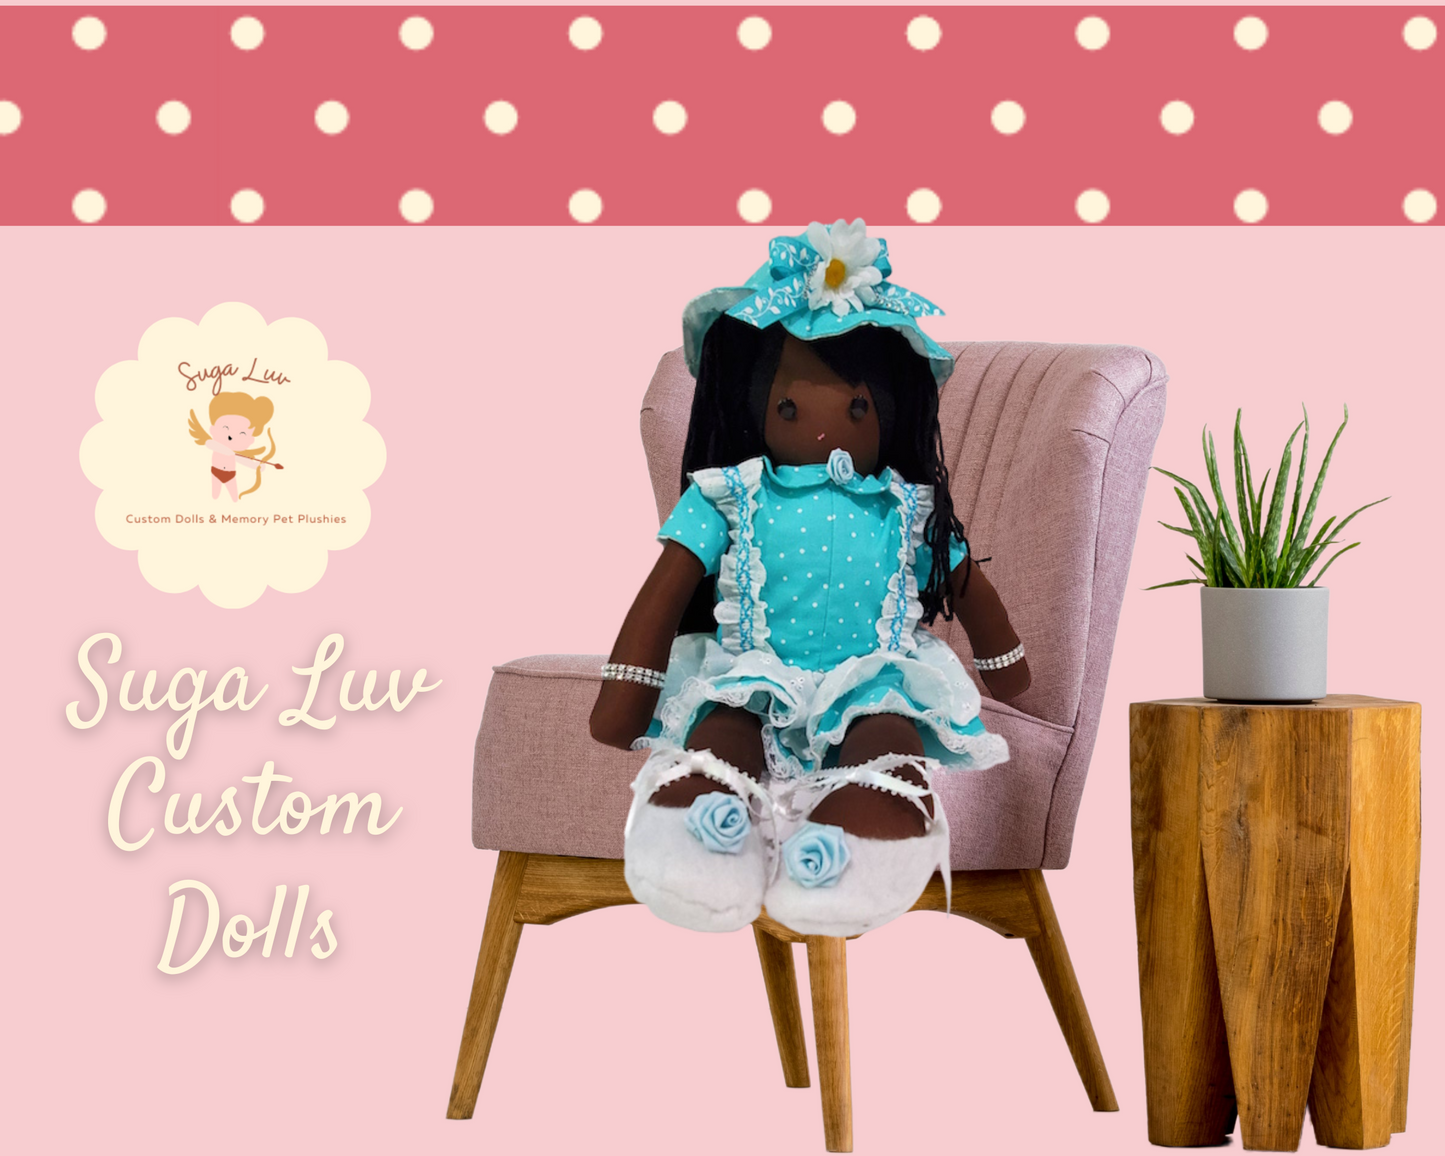 Handmade Doll and doll clothing in aqua dress